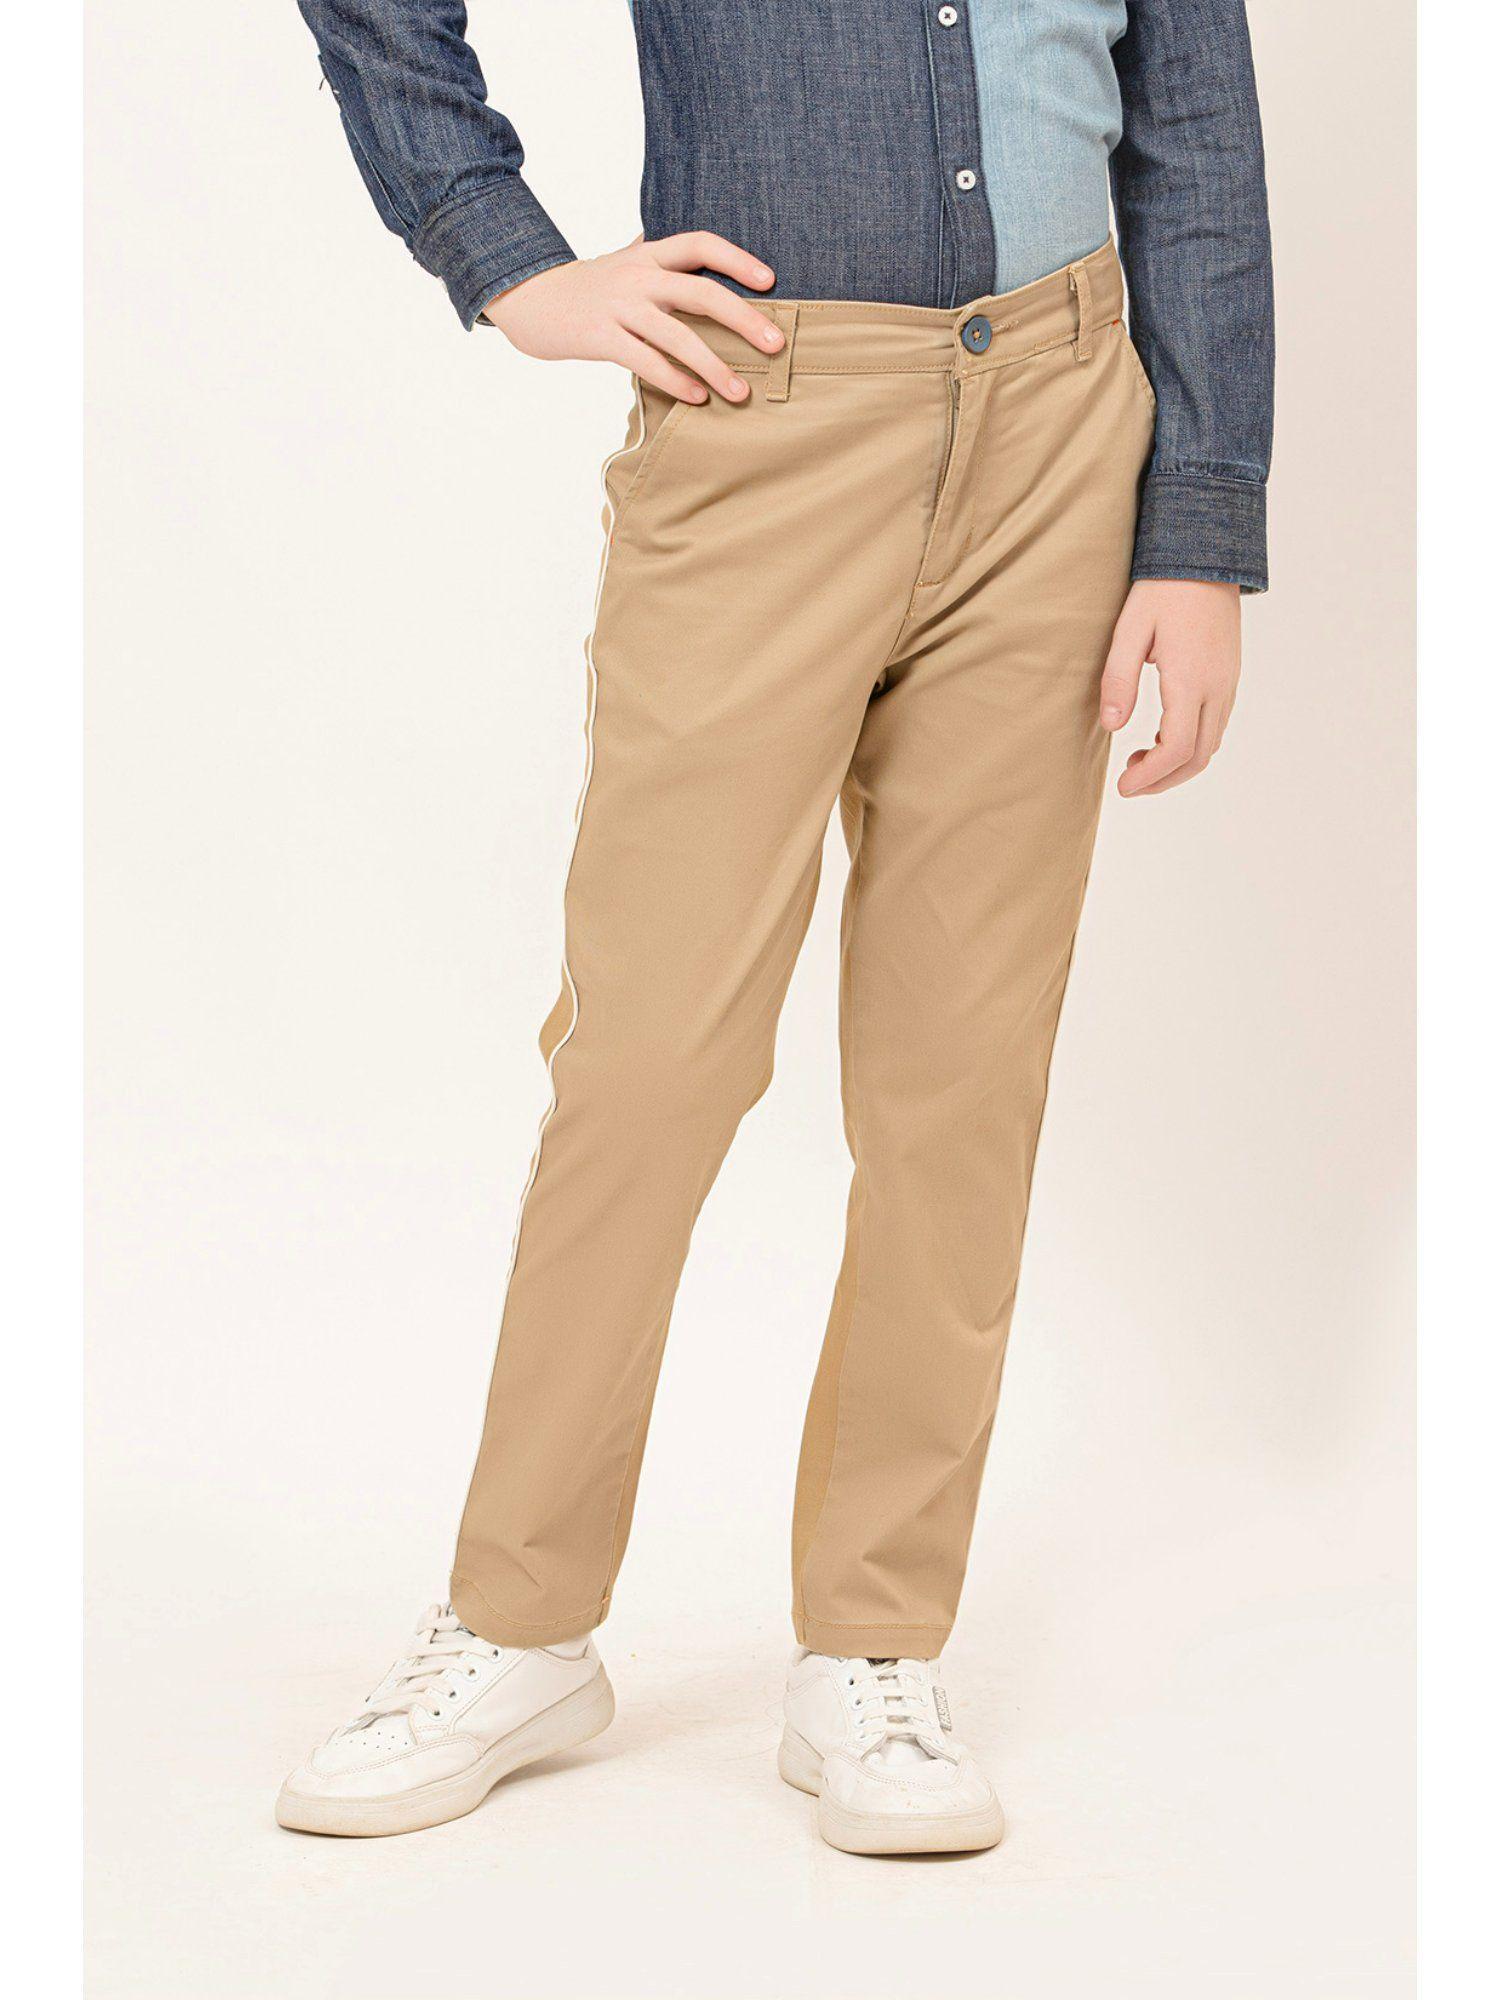 varsity-chic-beige-comfort-fit-trouser